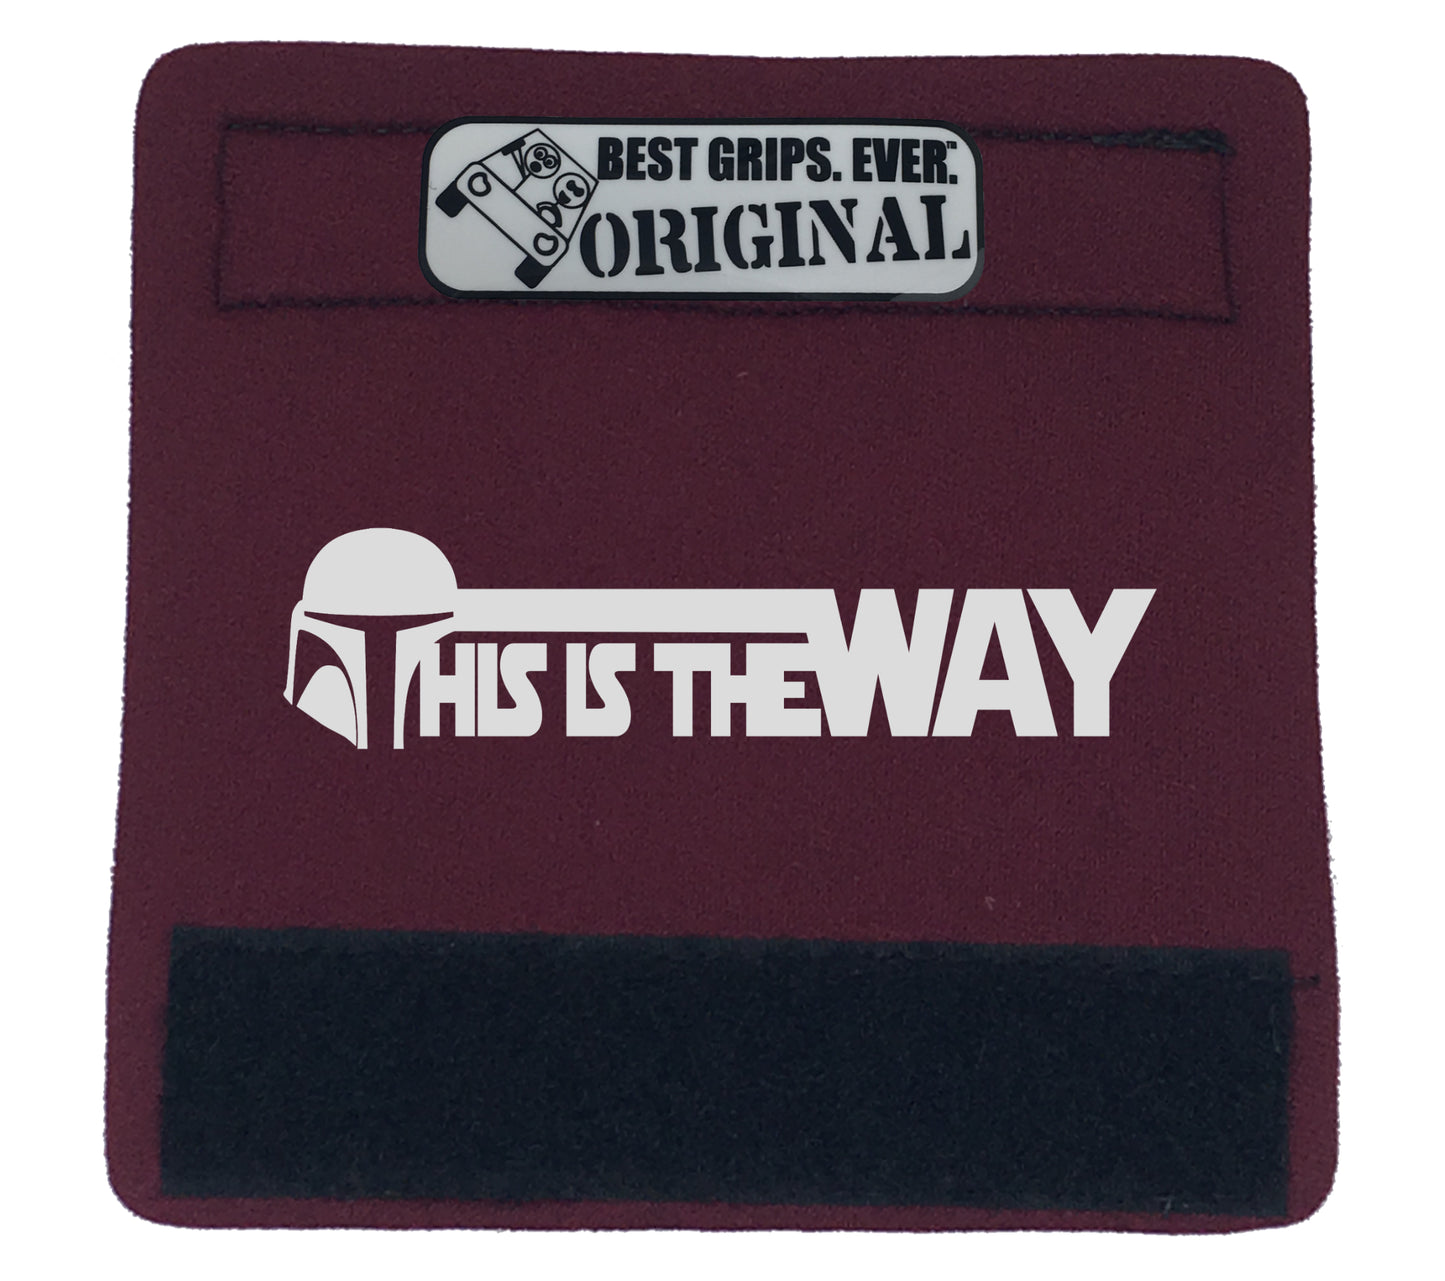 The Way Grip. - BEST GRIPS. EVER.®